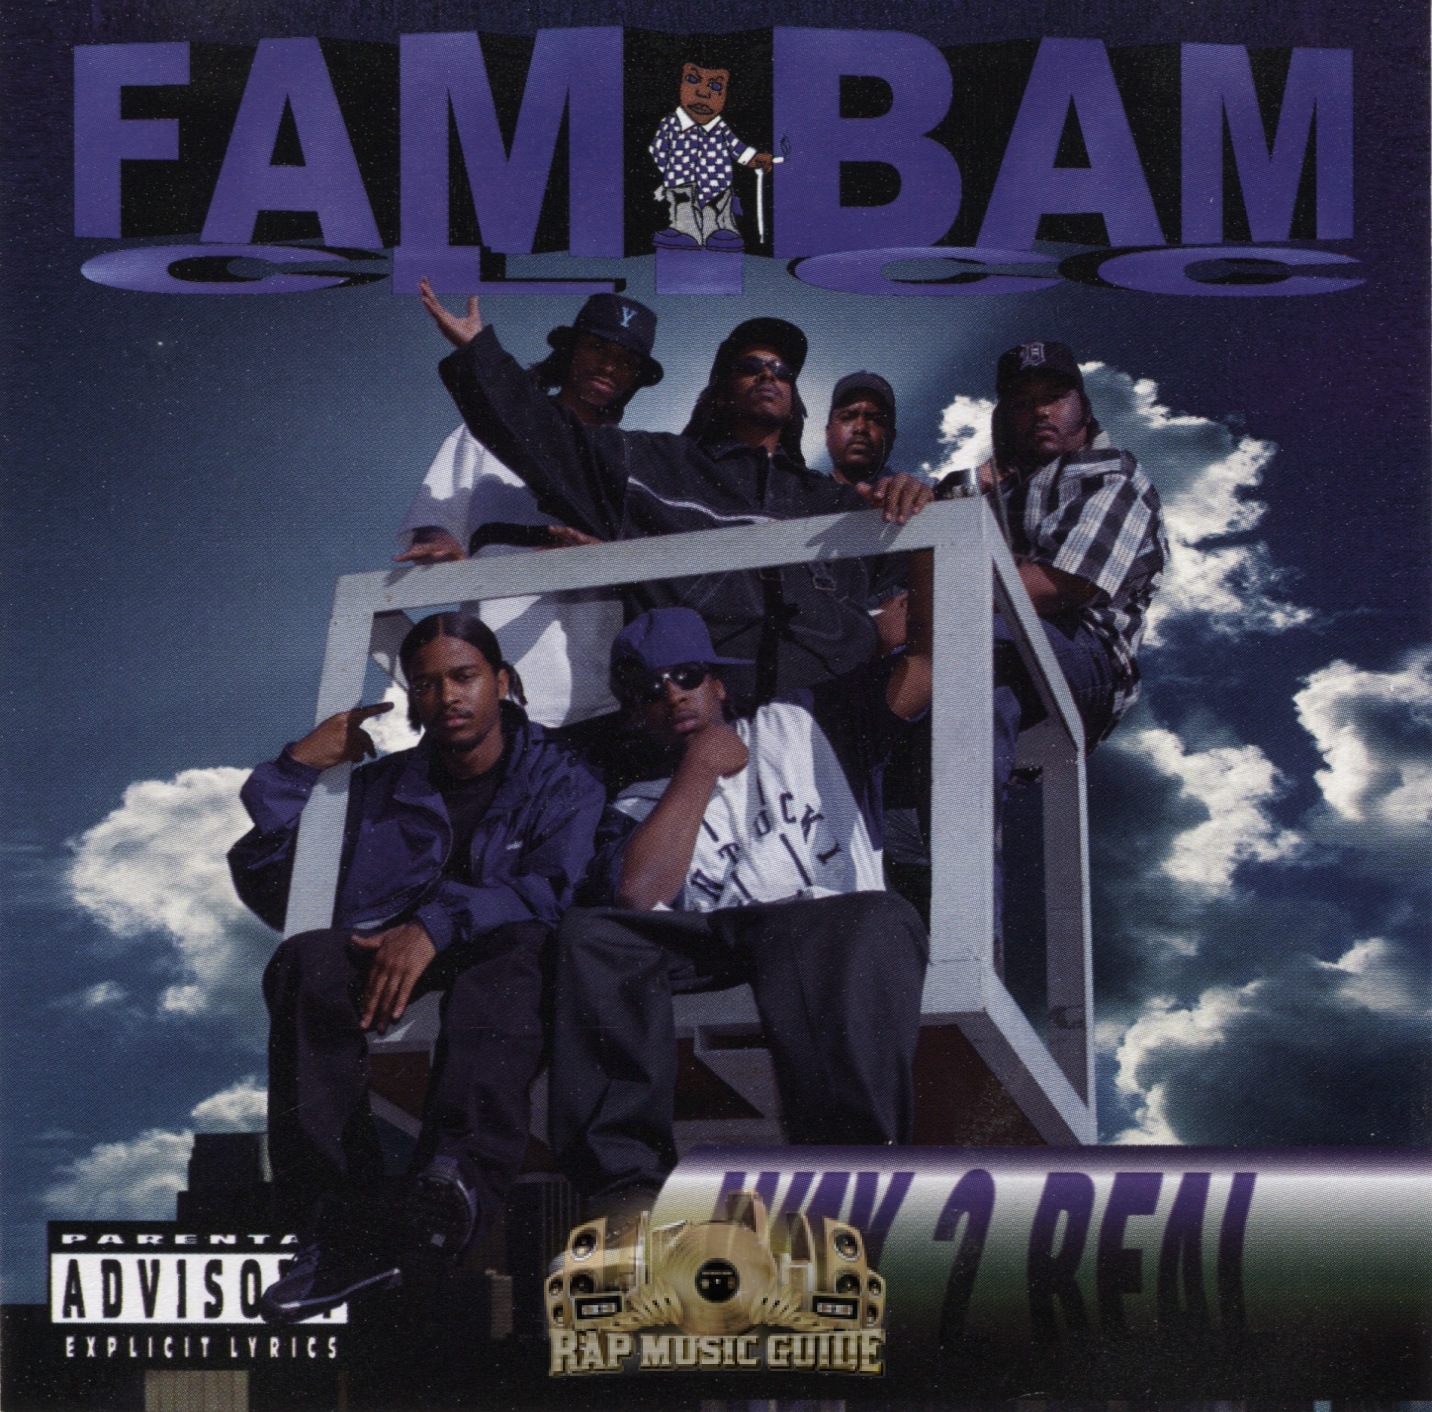 Fam Bam Clicc - Way 2 Real: CD | Rap Music Guide